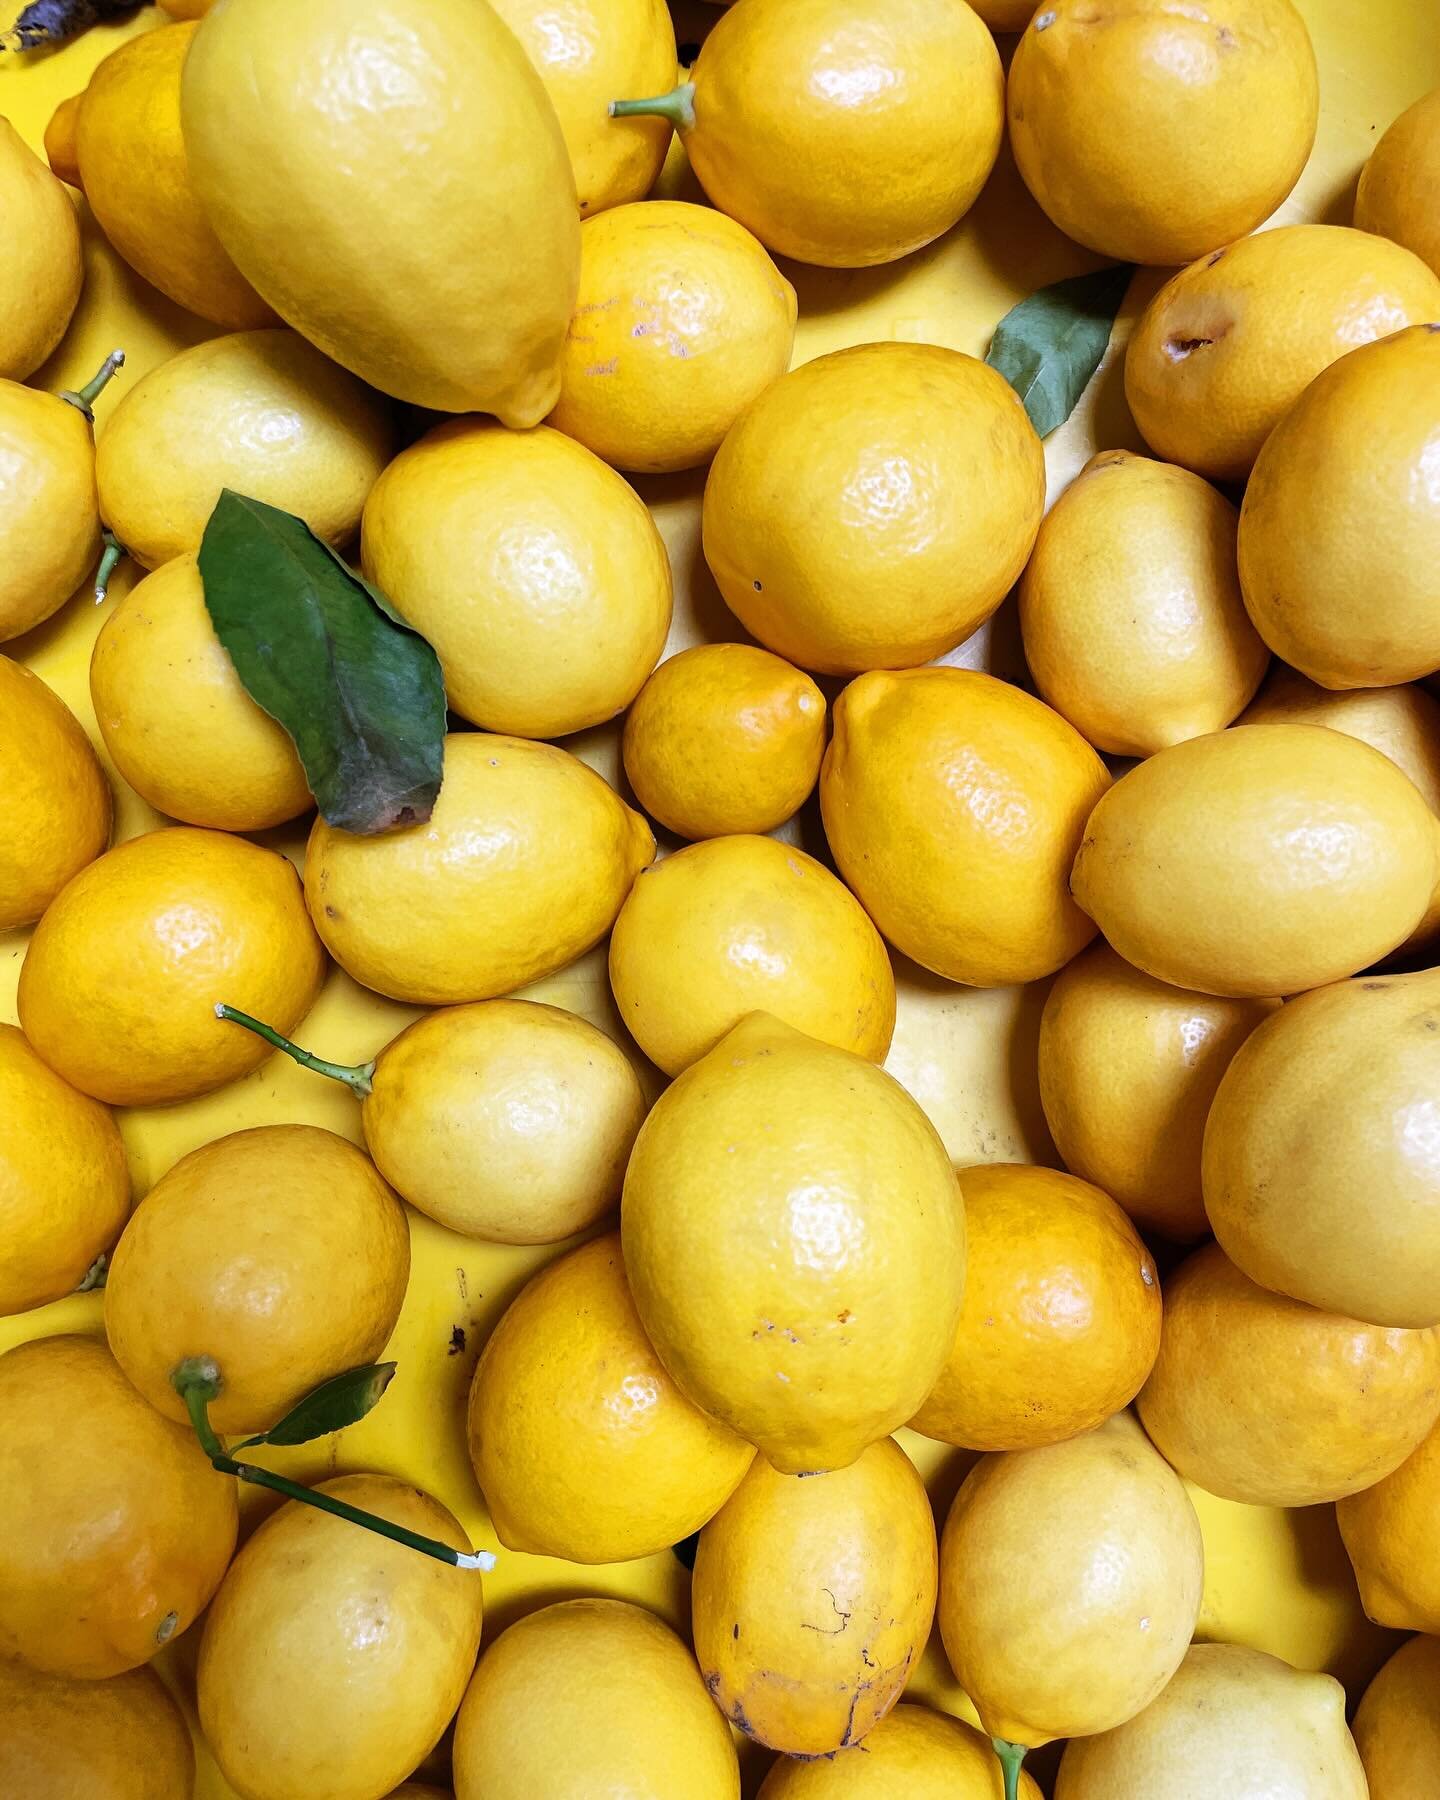 The lemon trees are bursting! Come on in for your Lemon Sorbet 🍋 this month.

#locallemons #sonomaingredients #welovefreshfruit